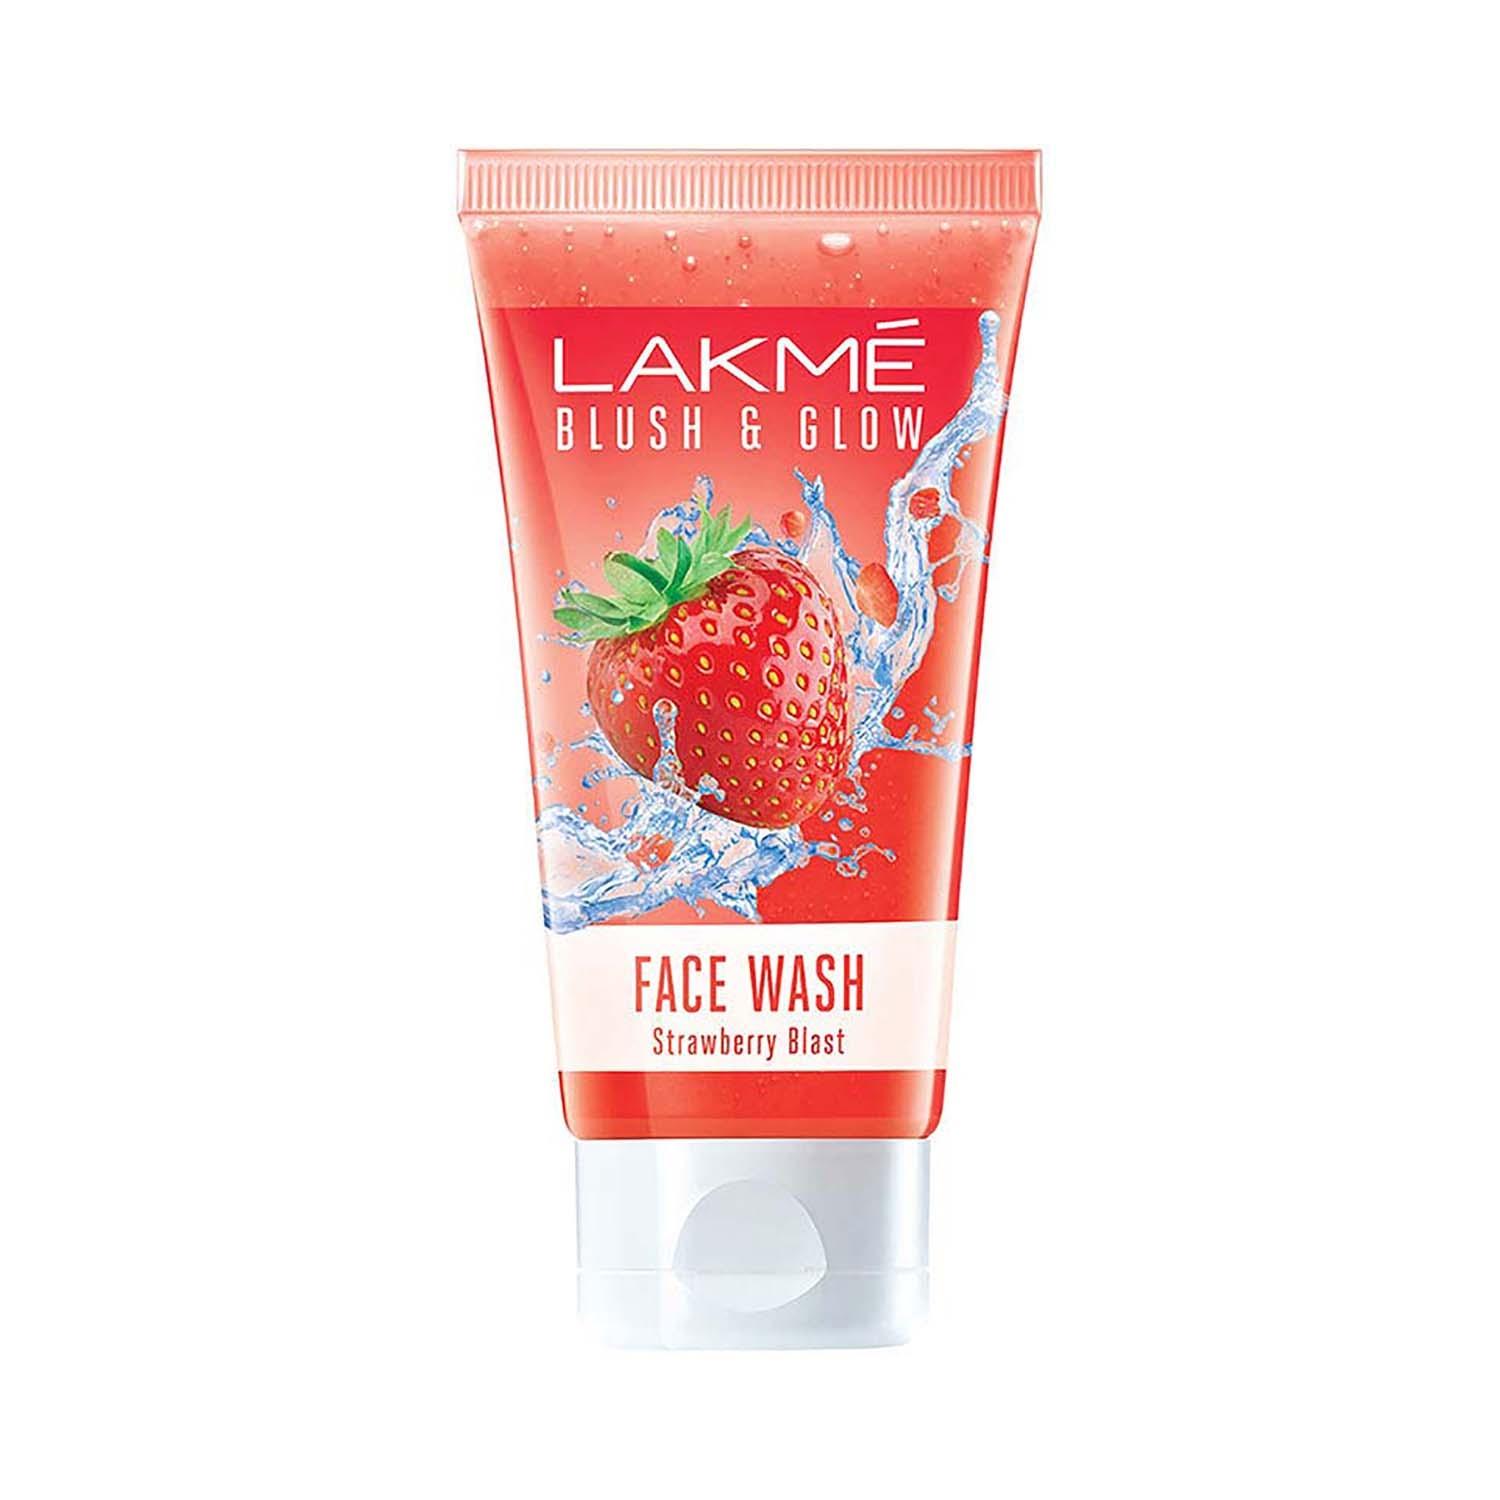 lakme blush and glow strawberry blast gel face wash (100g)